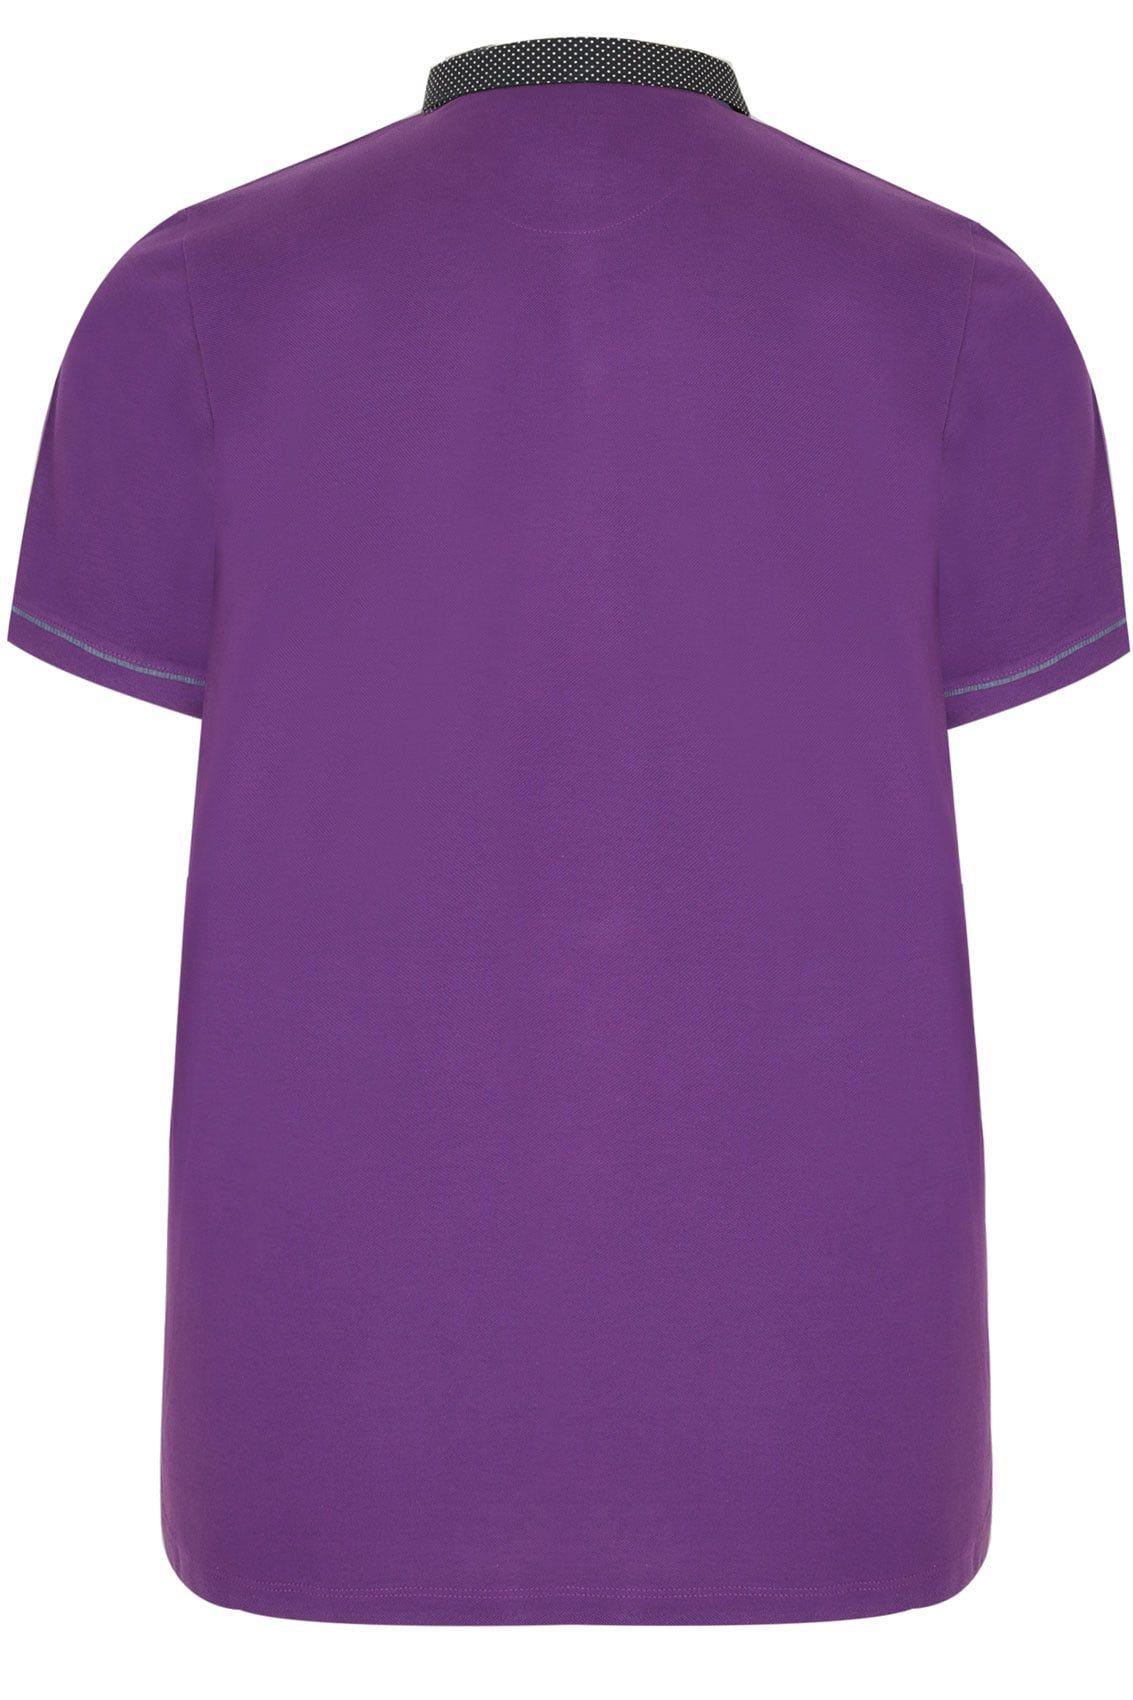 Lavender Polo Logo - Purple Polo Shirt With Contrast Polka Dot Collar & Pocket Trim Size ...